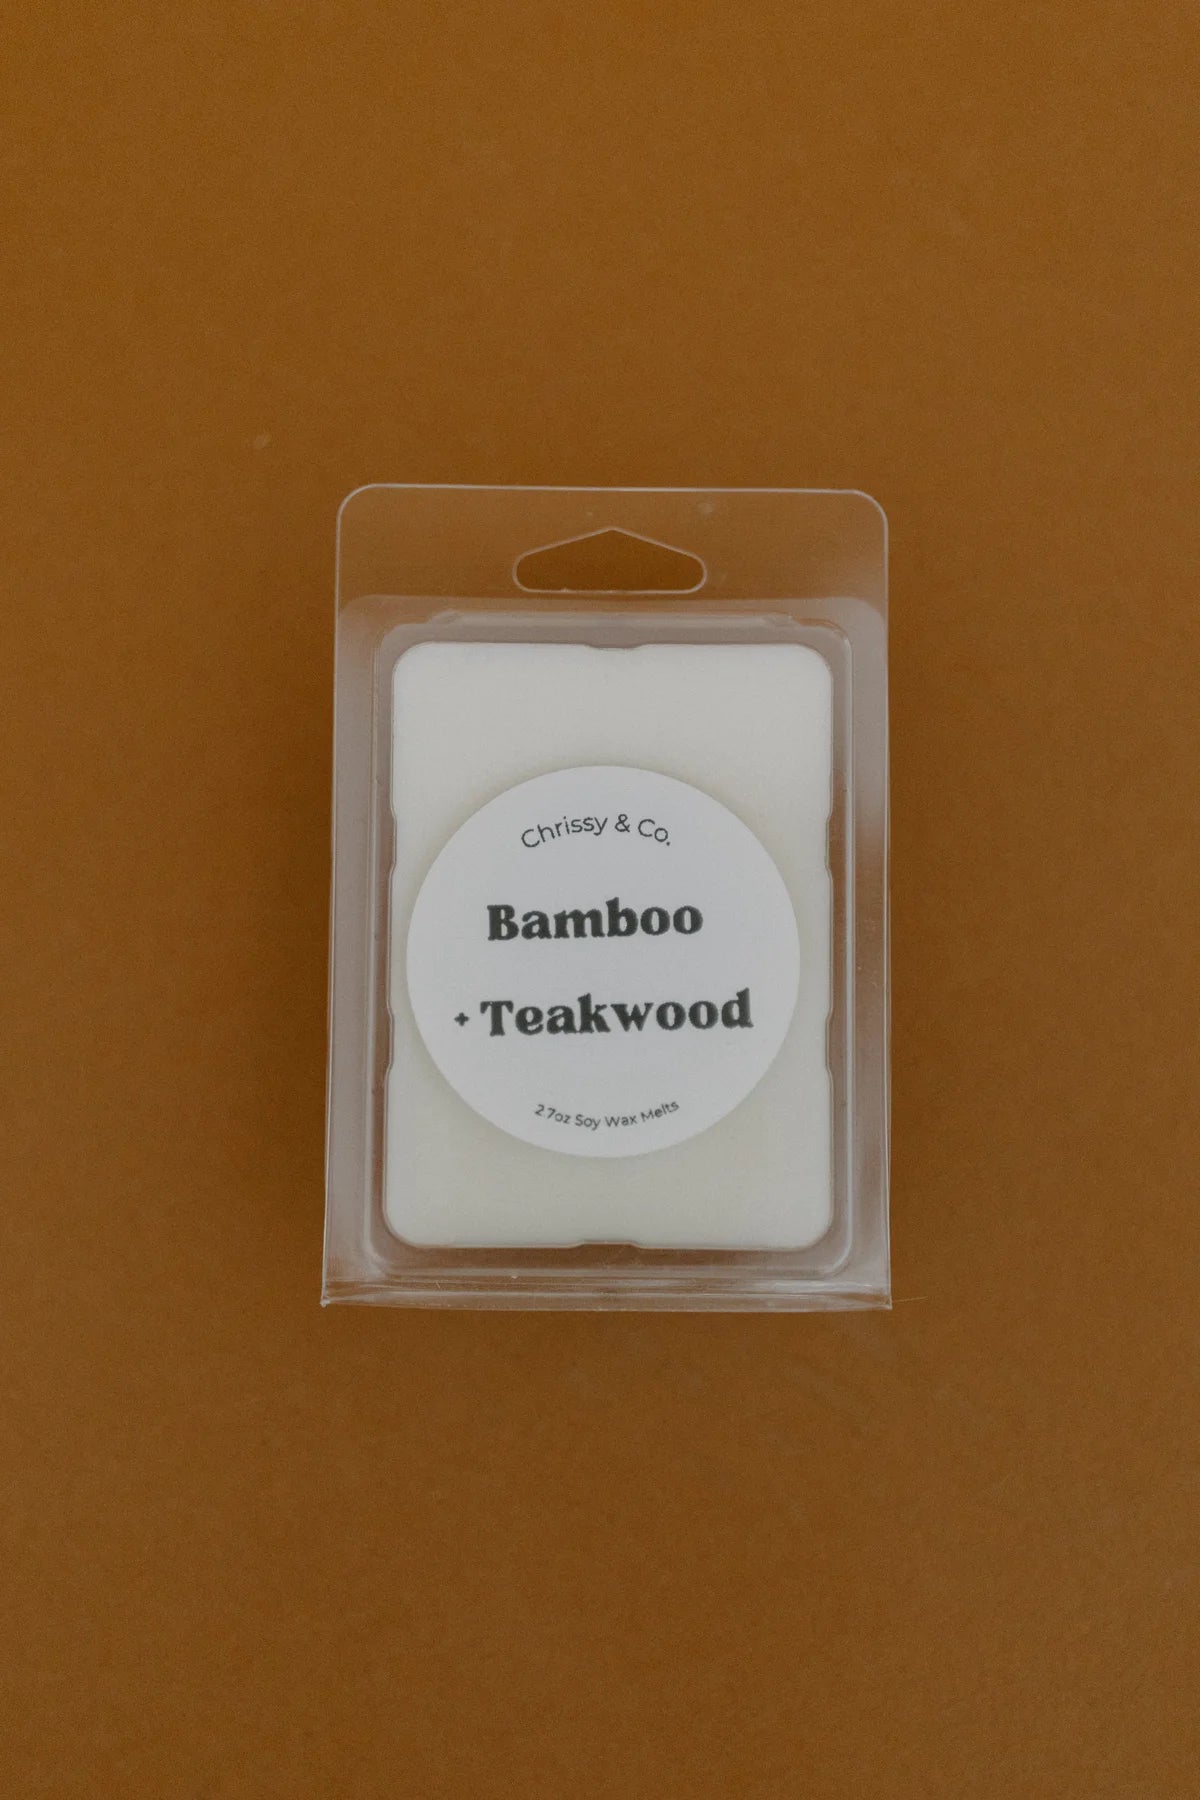 Bamboo & Teakwood